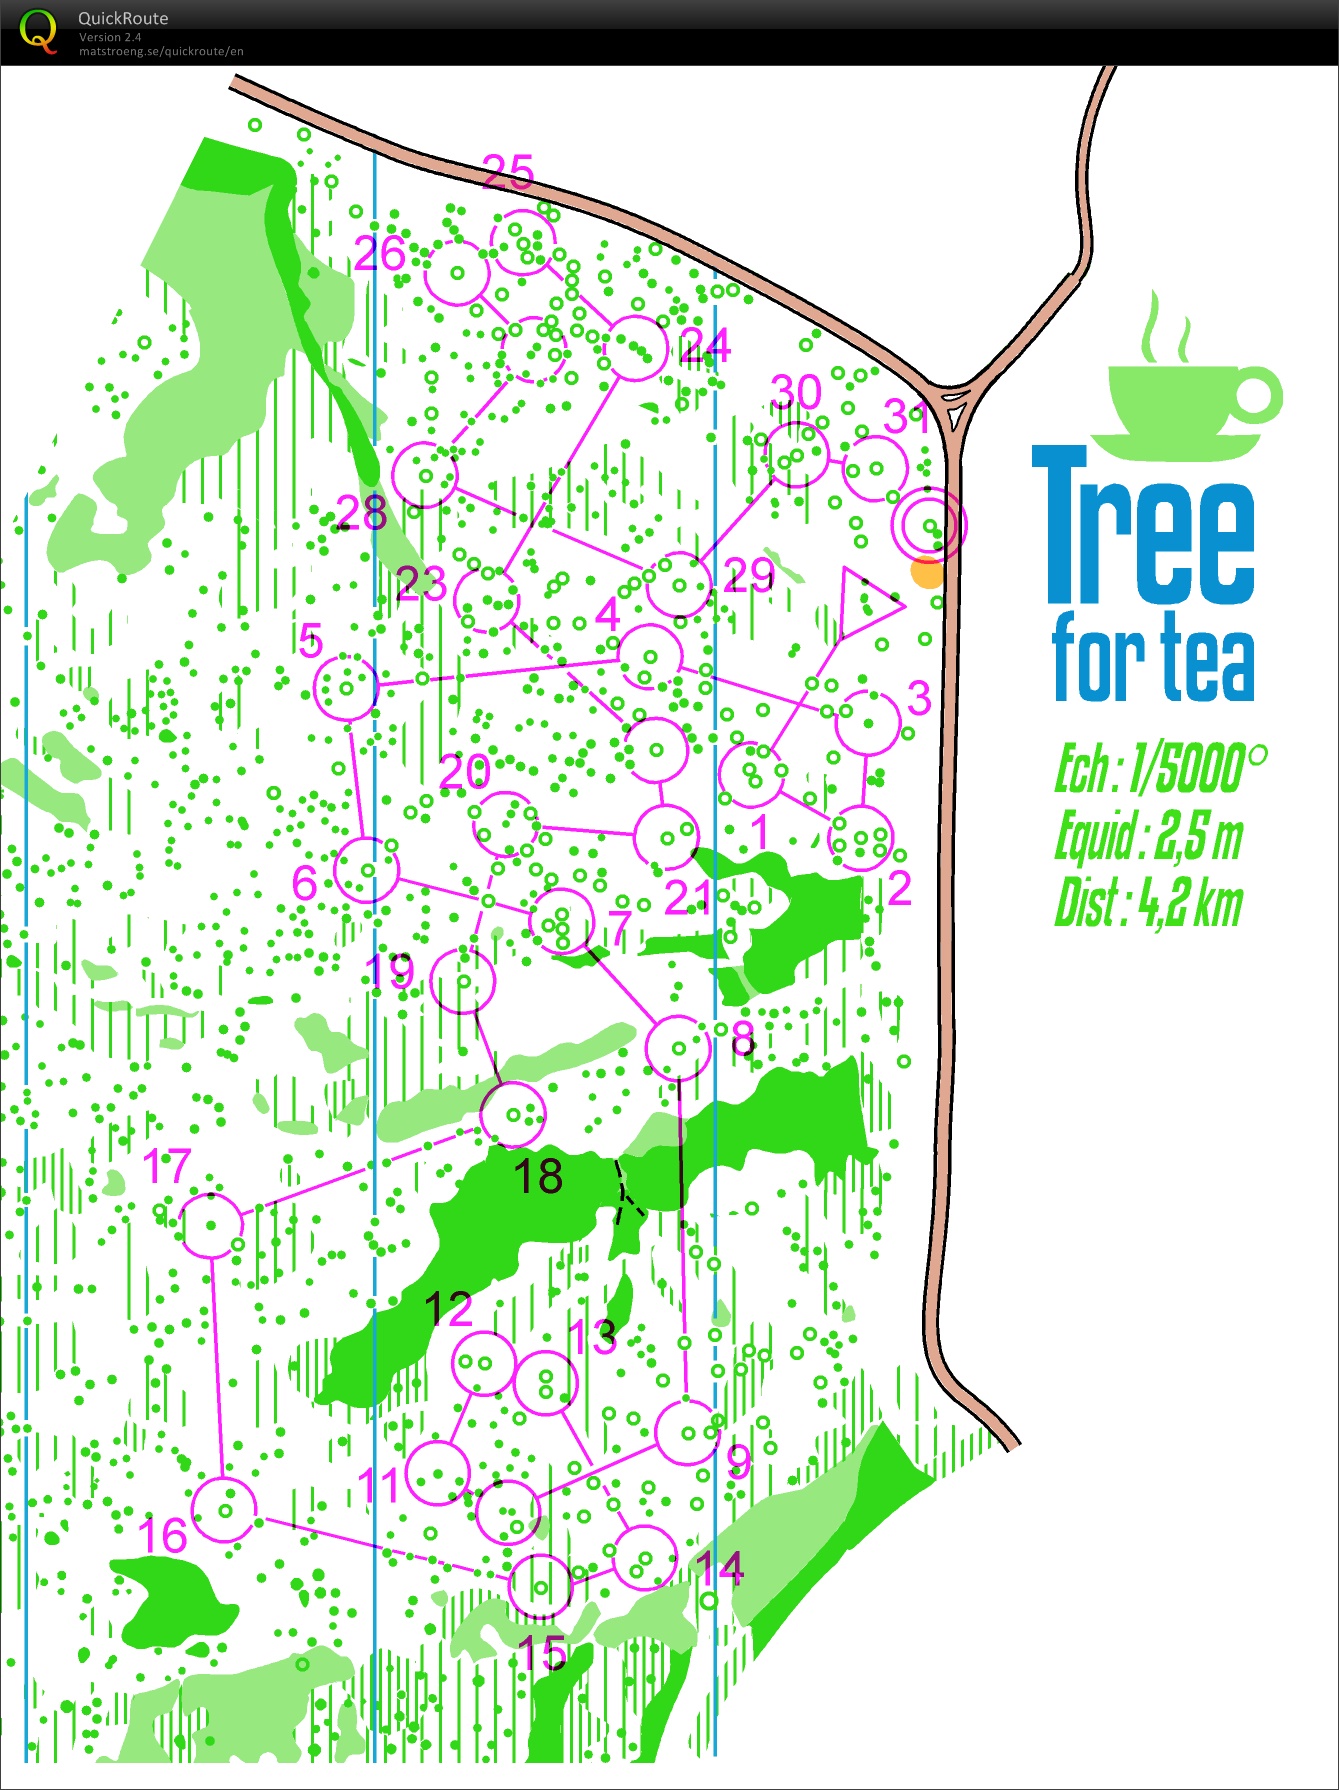 Tree for tea (16/01/2016)